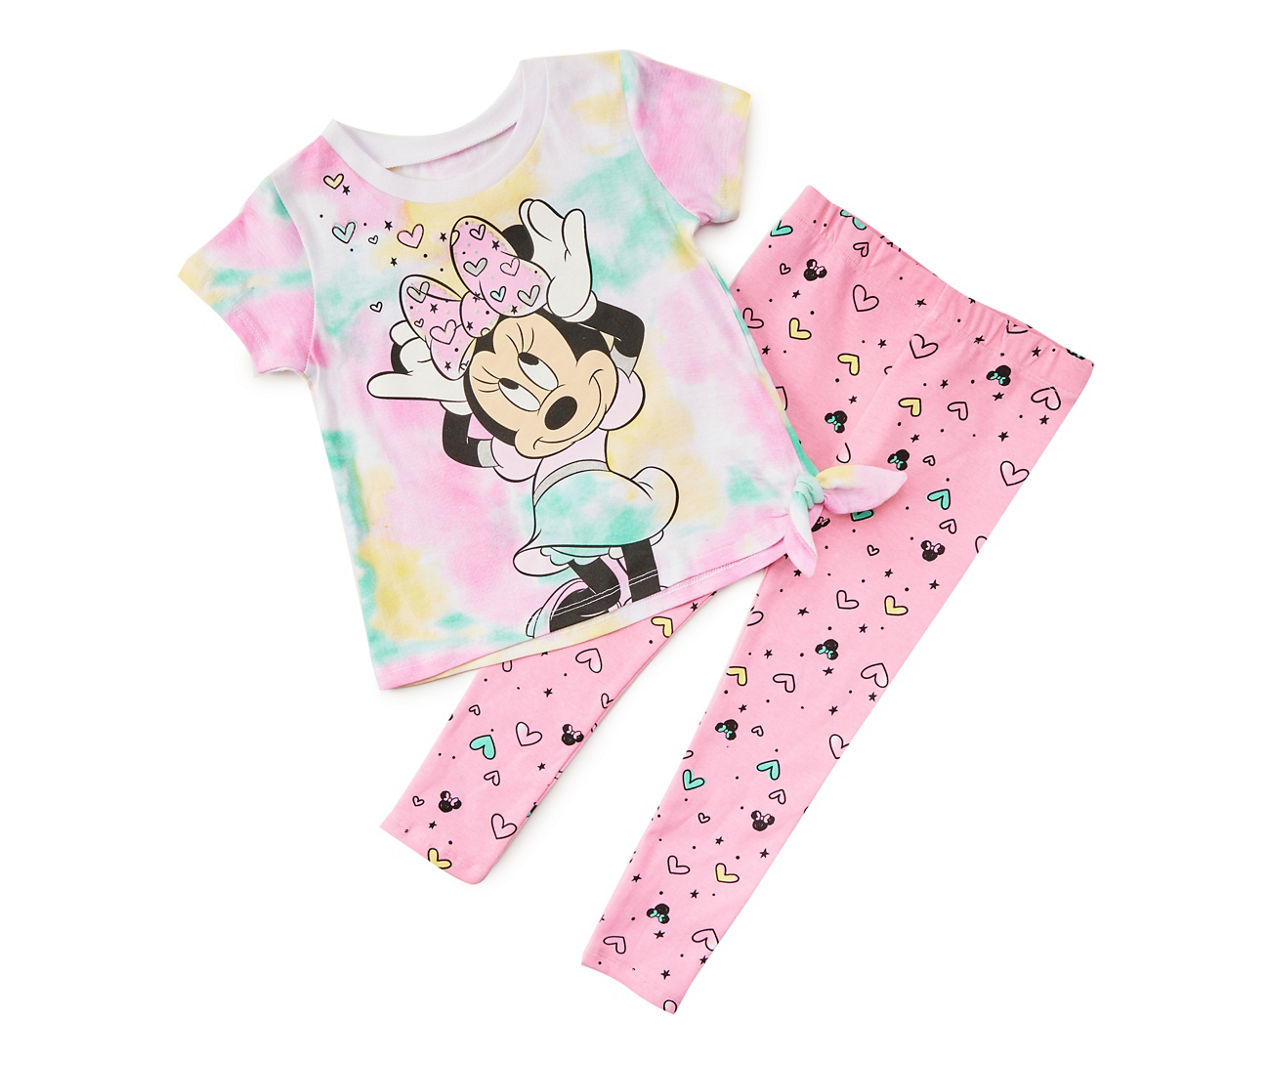 Kids' Size 6X Pink & Aqua Tie-Dye Hearts Minnie Mouse Tee & Leggings